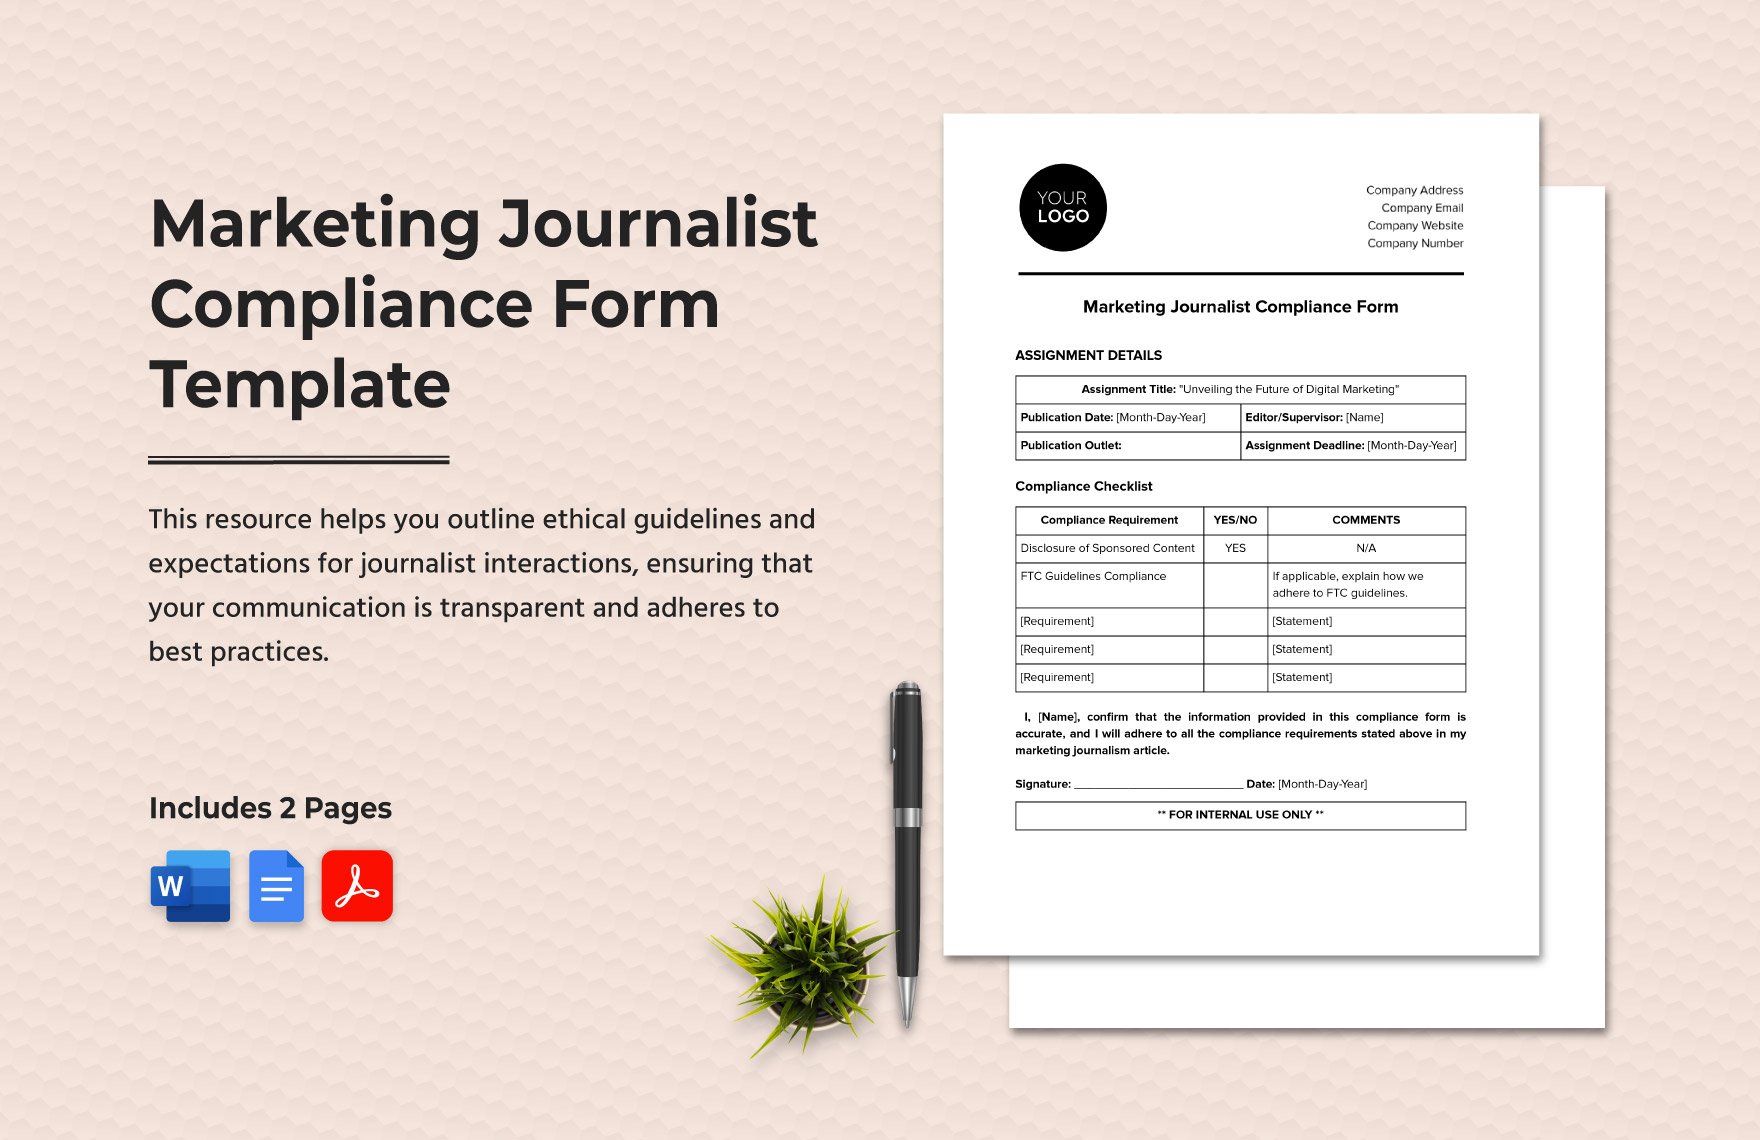 Marketing Journalist Compliance Form Template in Word, Google Docs, PDF